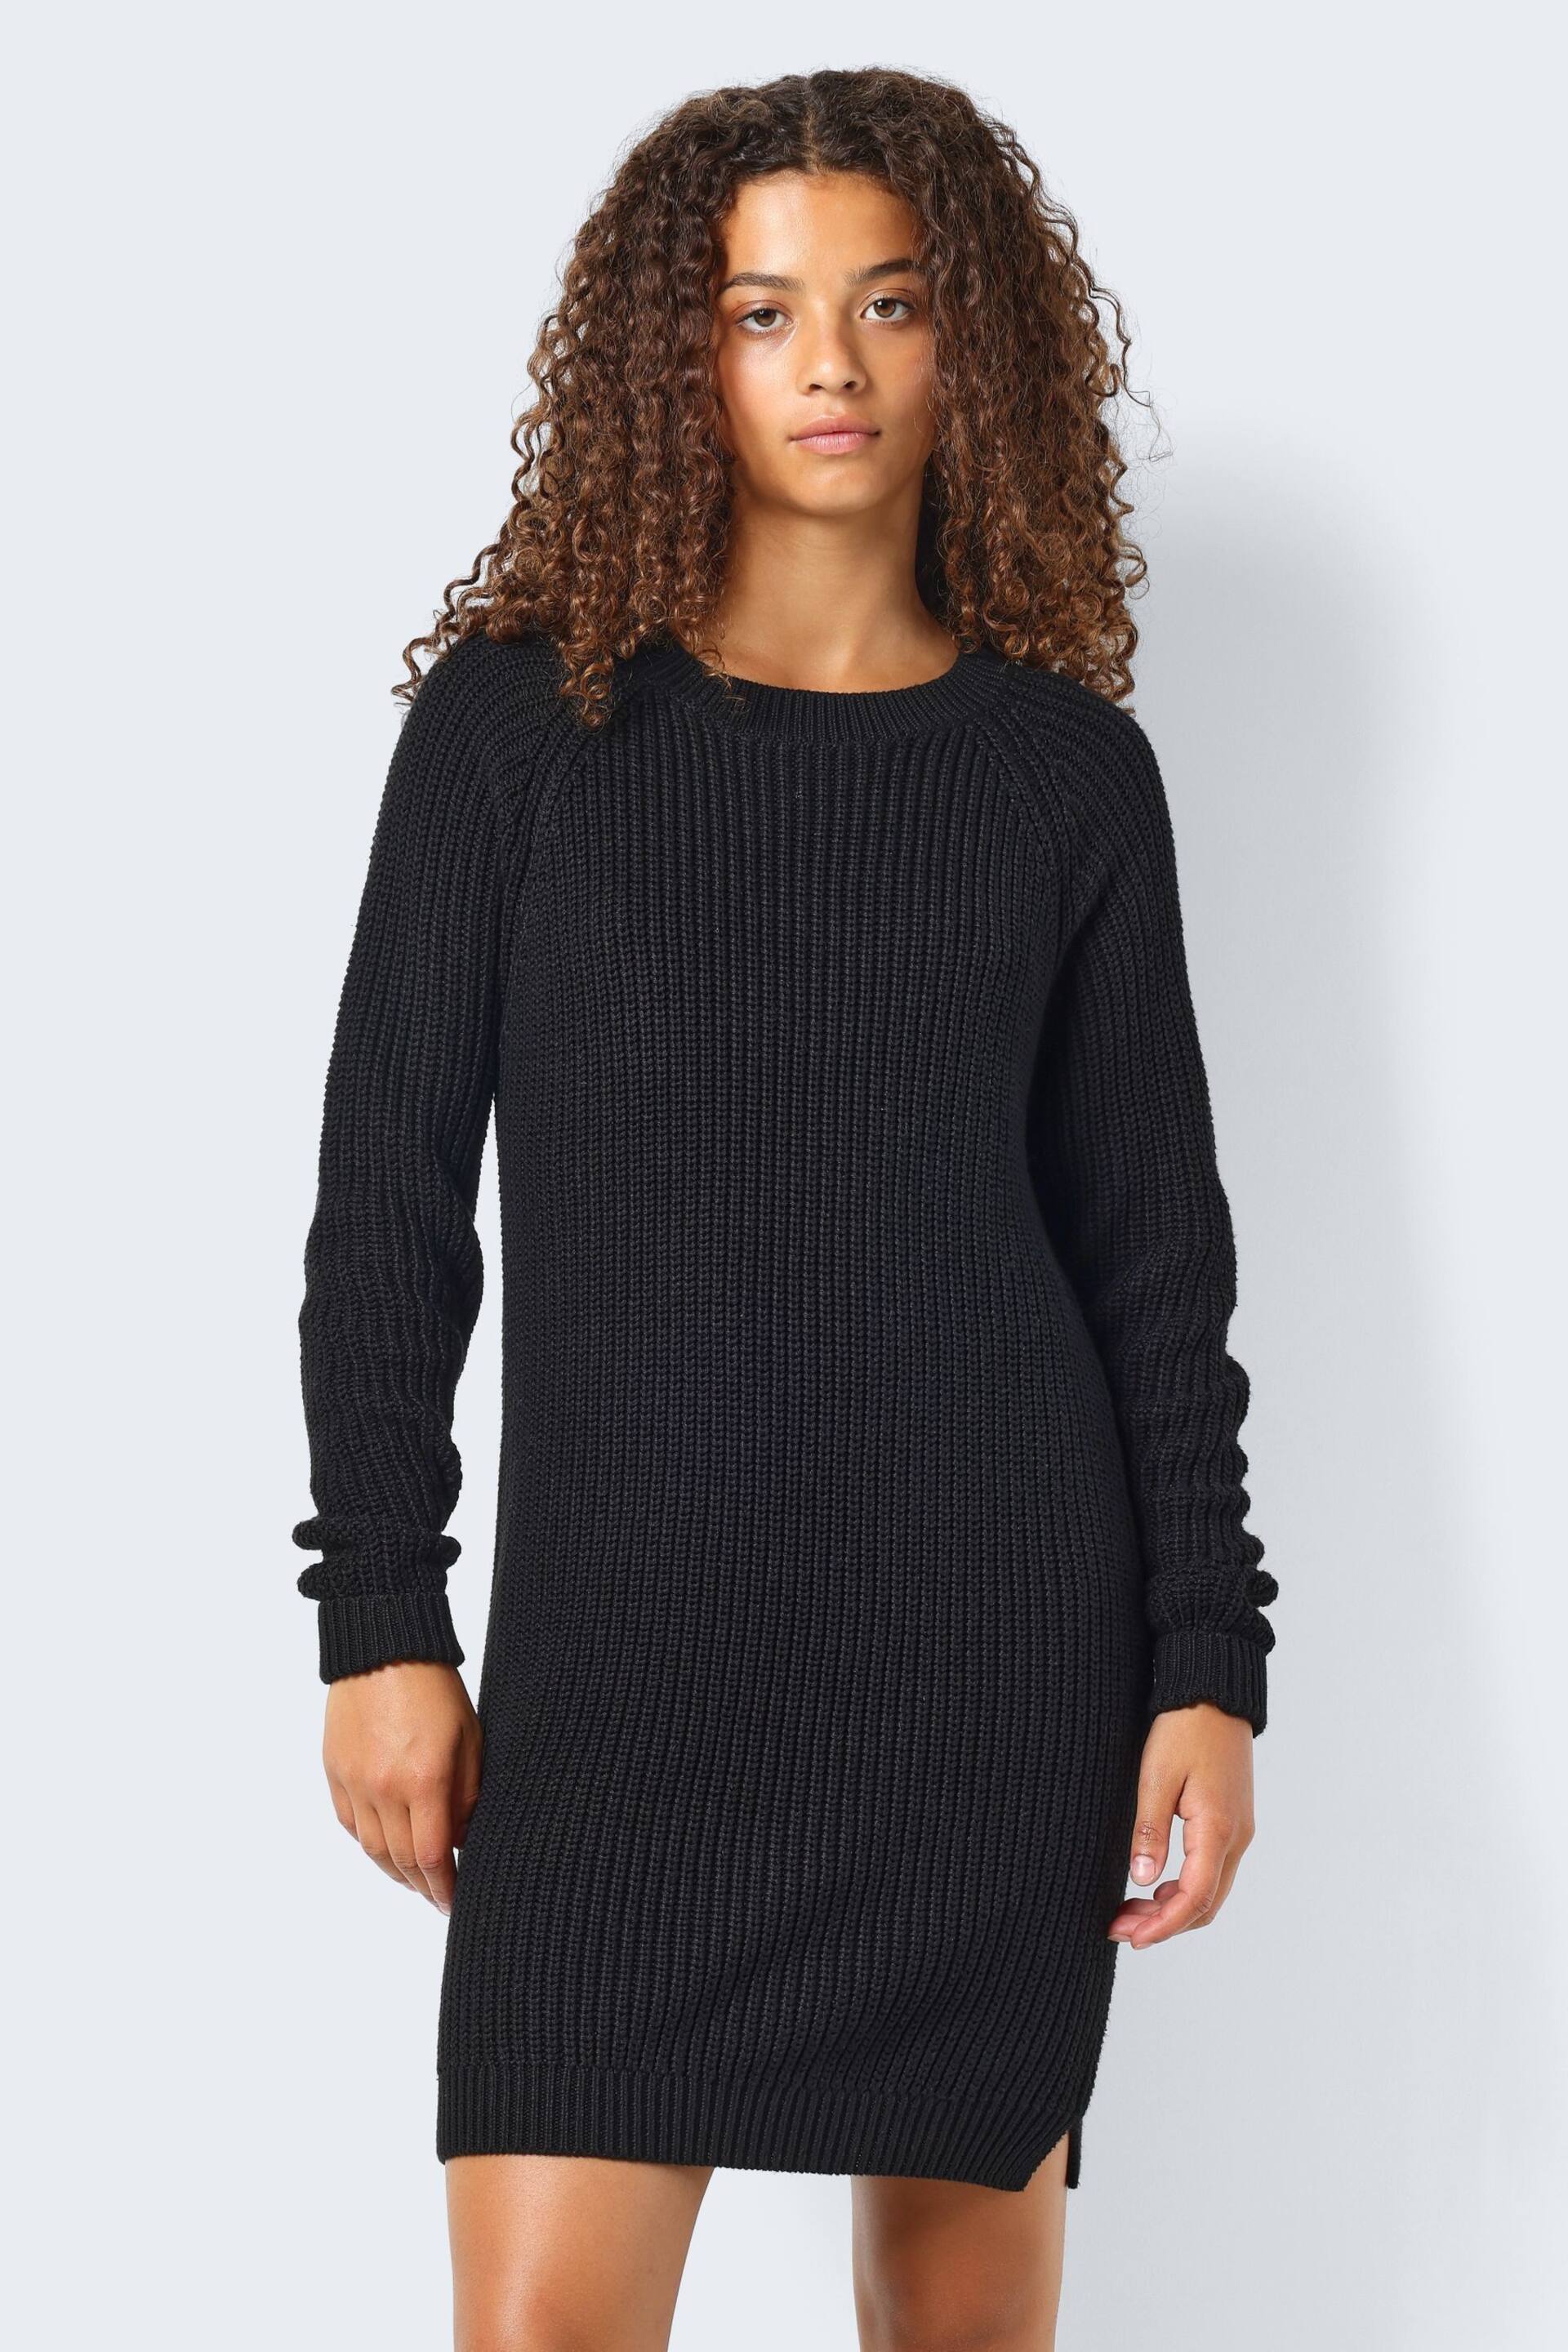 NOISY MAY Black Long Sleeve Jumper Dress - Image 1 of 5